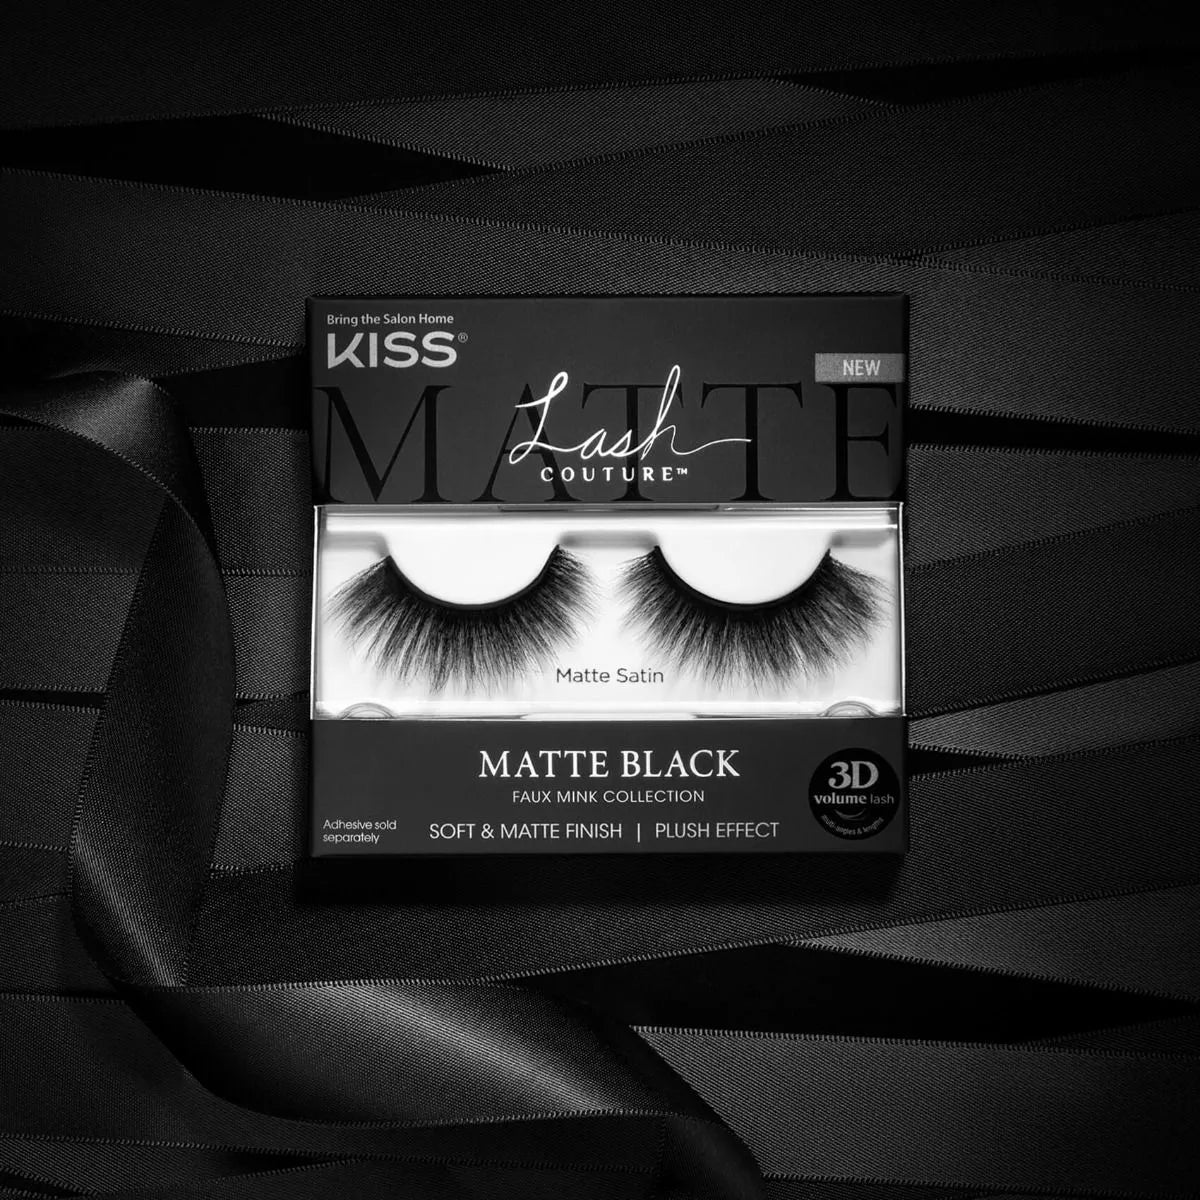 Kiss Lash Couture Matte Black Satin Faux Mink Eyelashes